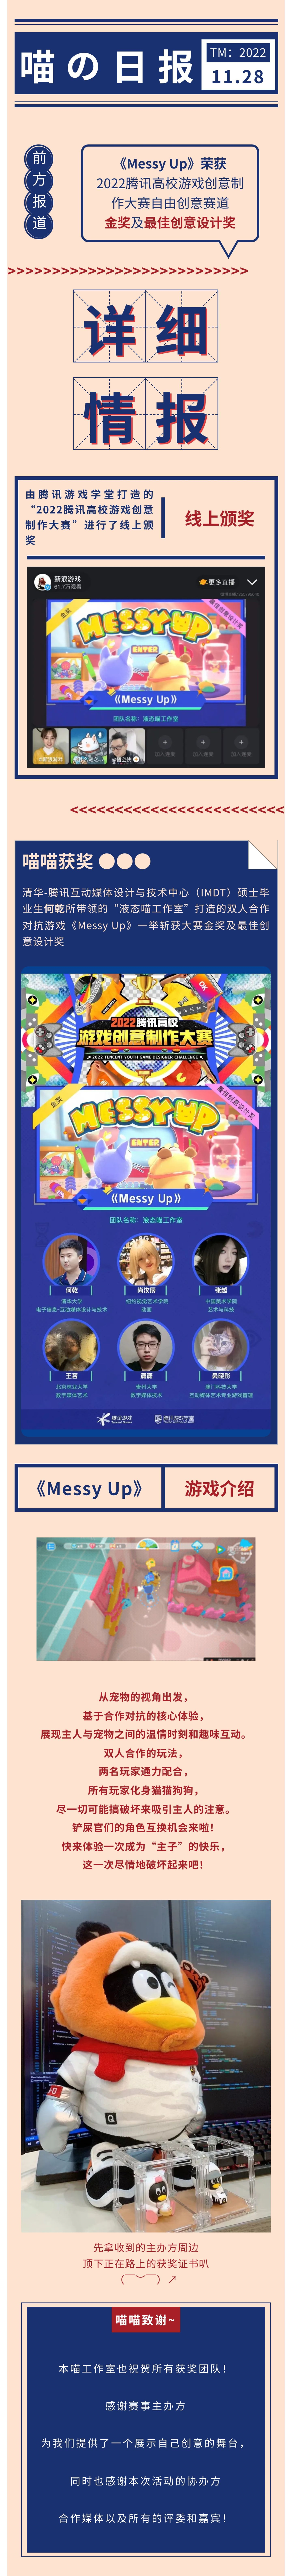 《Messy Up》斩获金奖及最佳创意设计奖丨 独游开发日志